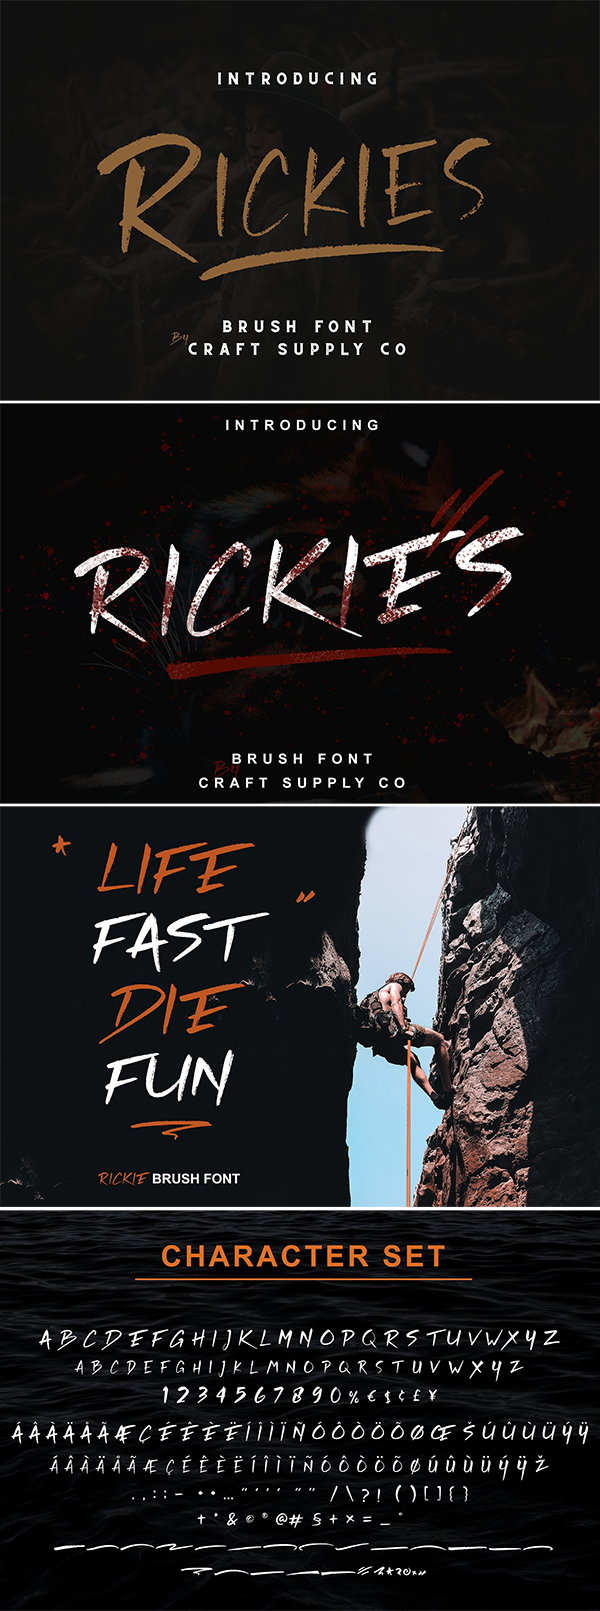 Rickies - Brush Font